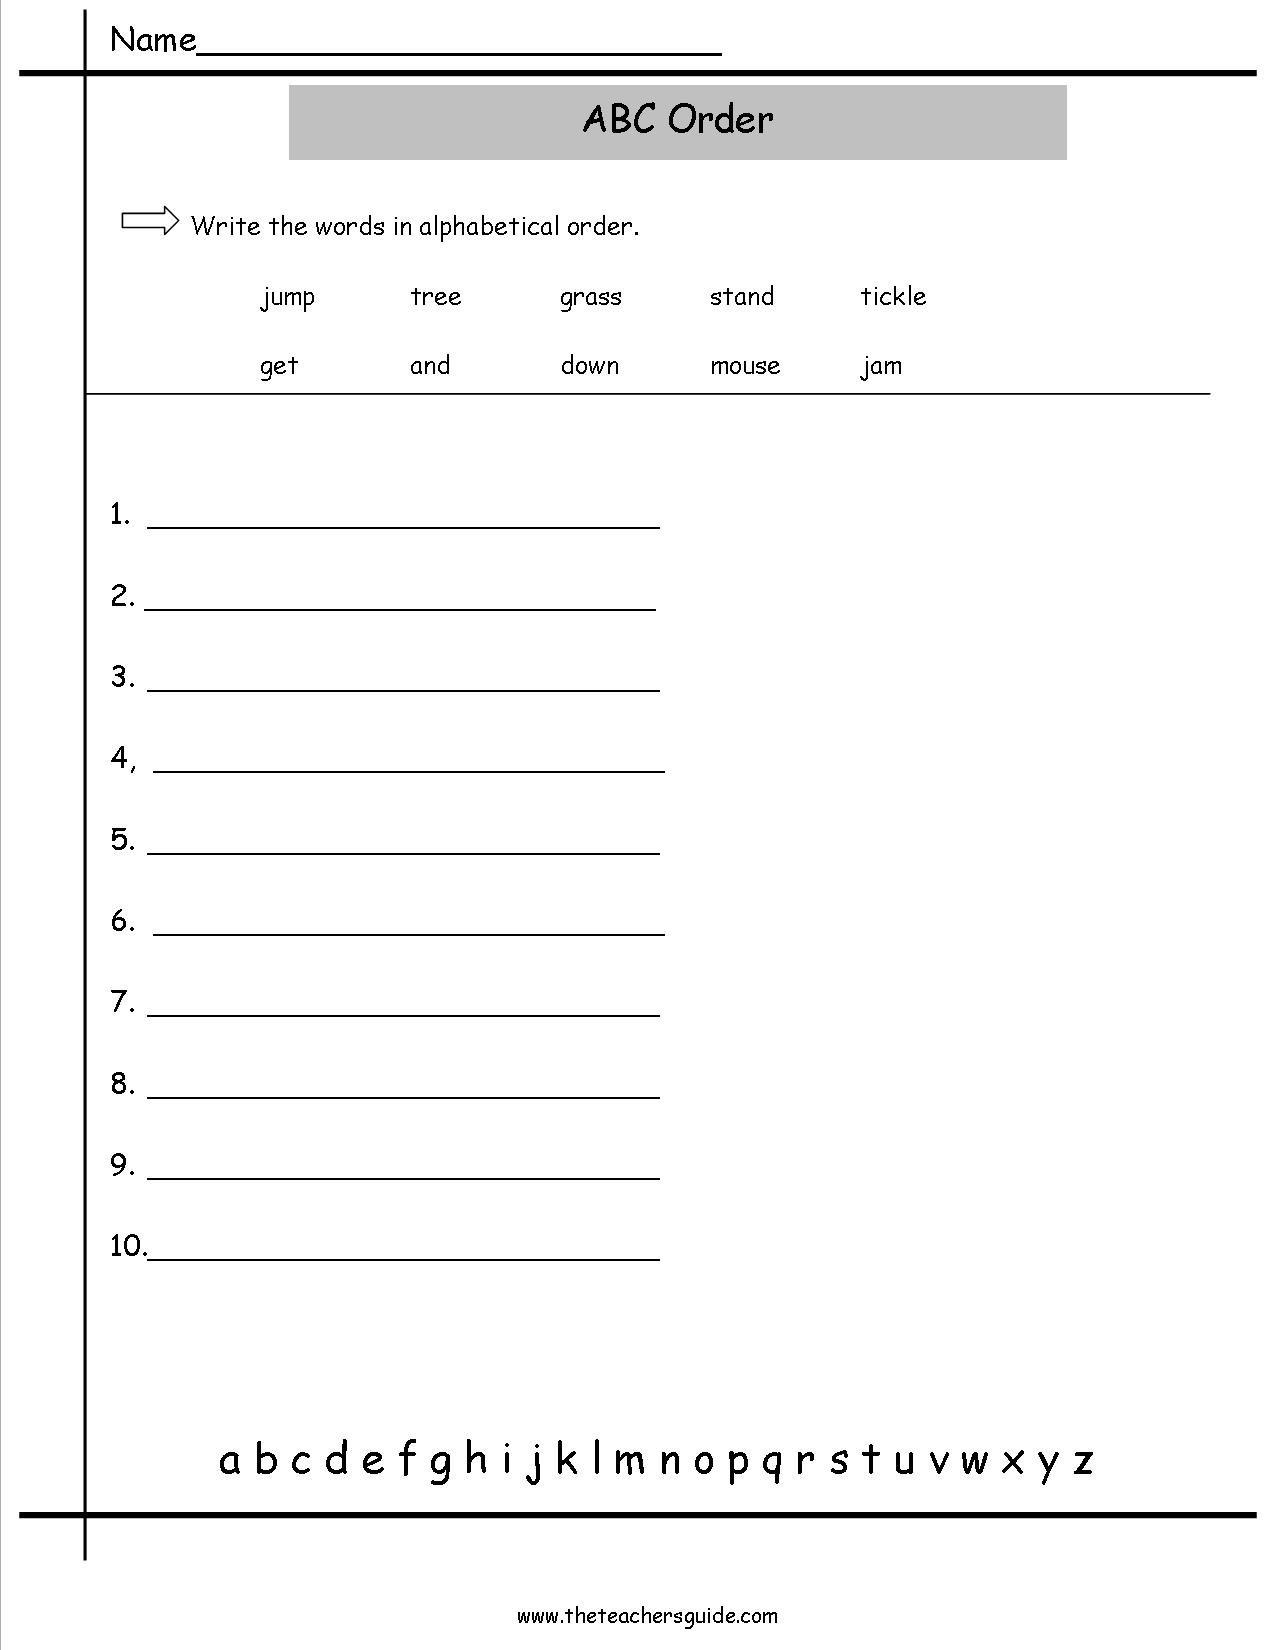 Third Grade ABC Order Worksheets 2nd Letter Image